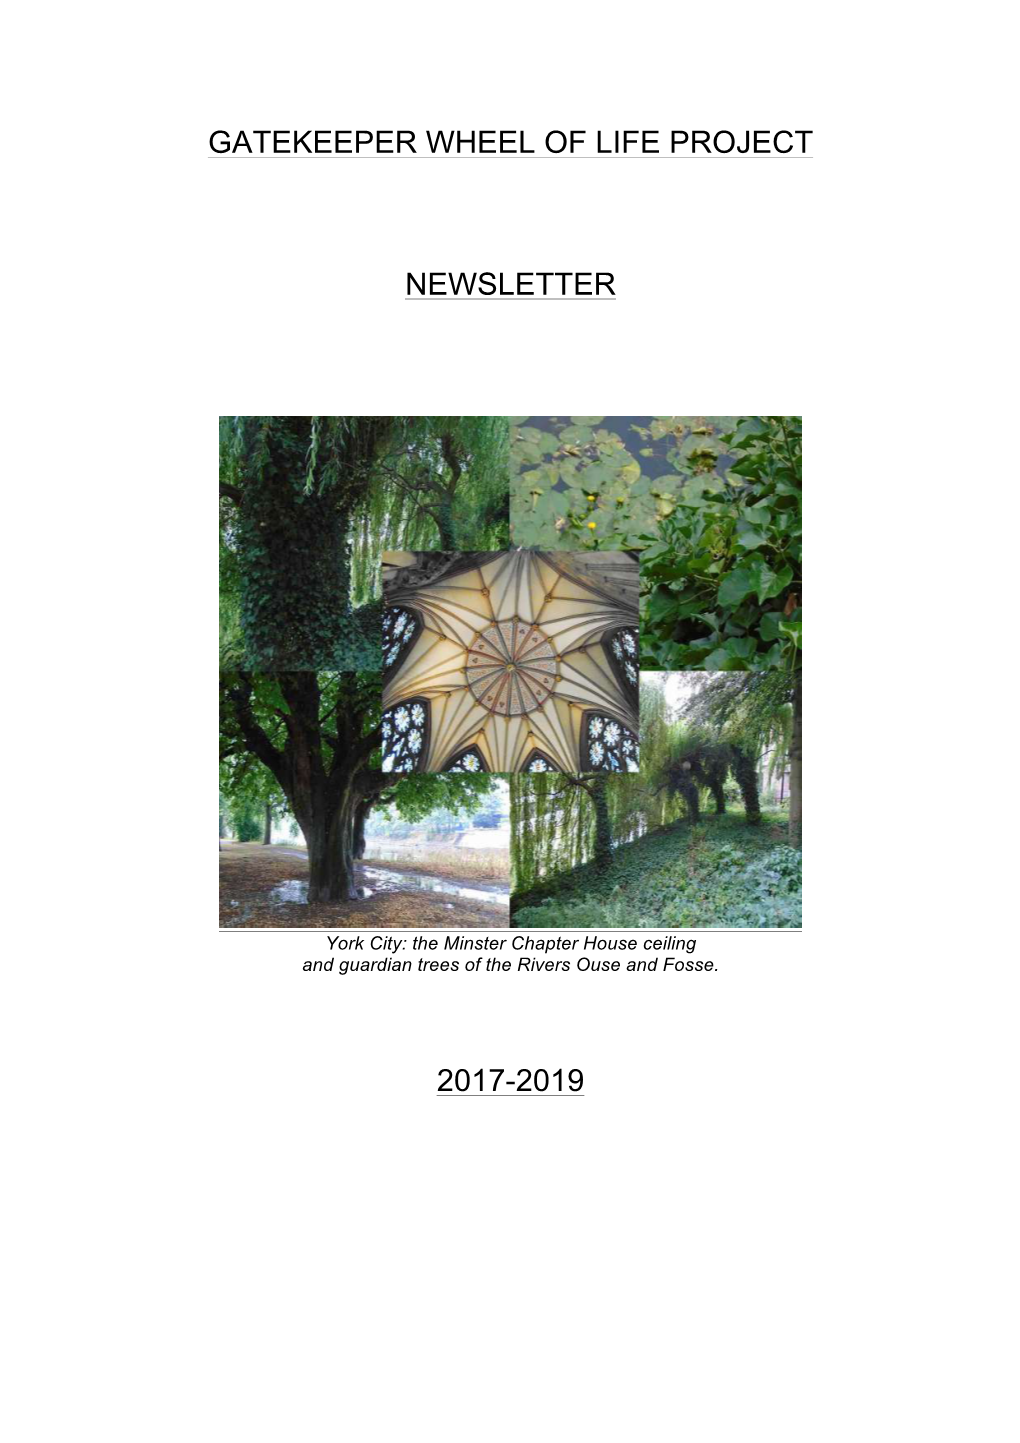 Gatekeeper Wheel of Life Project Newsletter 2017-2019